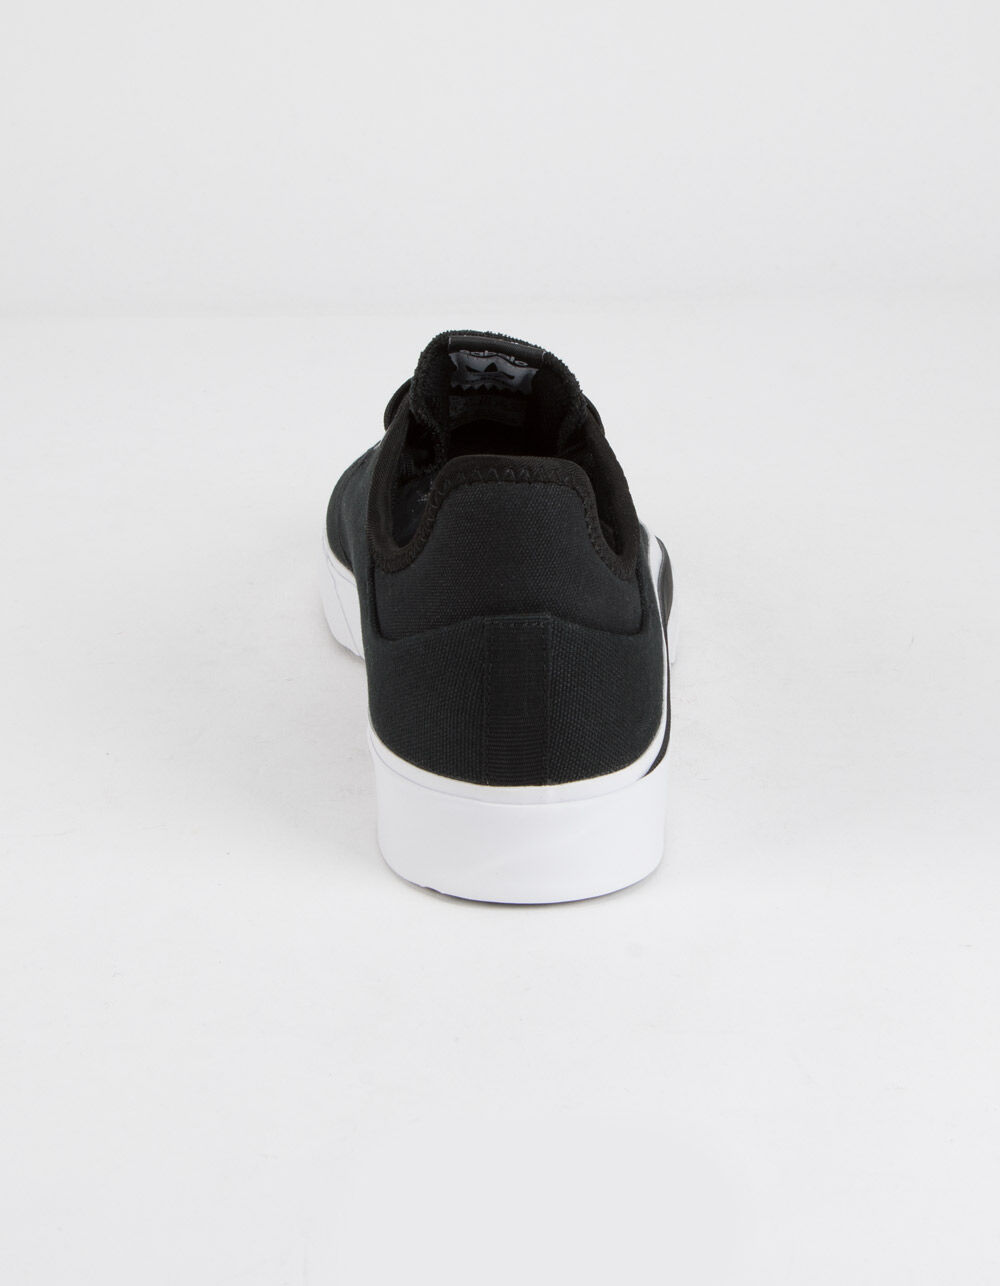 ADIDAS Sabalo Core Black & Cloud White Shoes image number 4